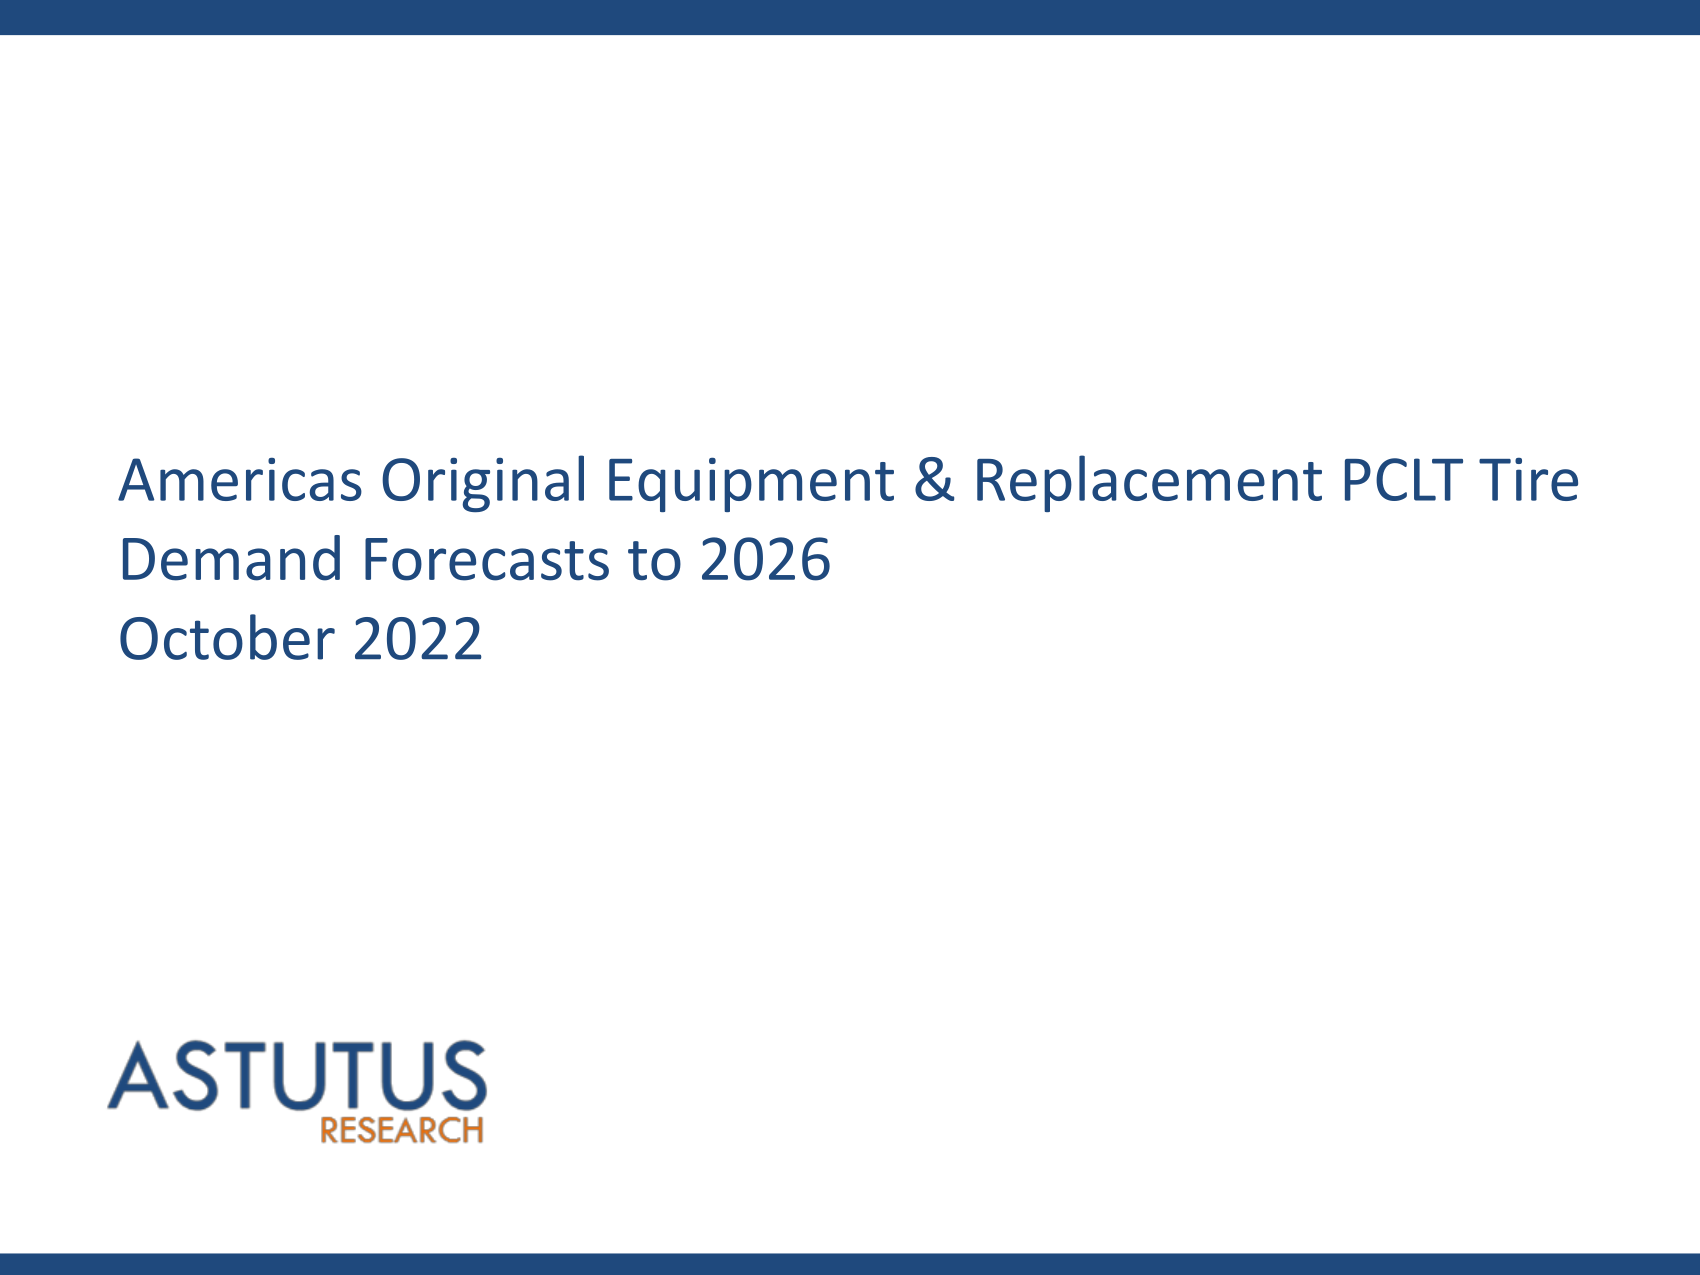 Americas Original Equipment & Replacement PCLT Tire Market Forecasts to 2026